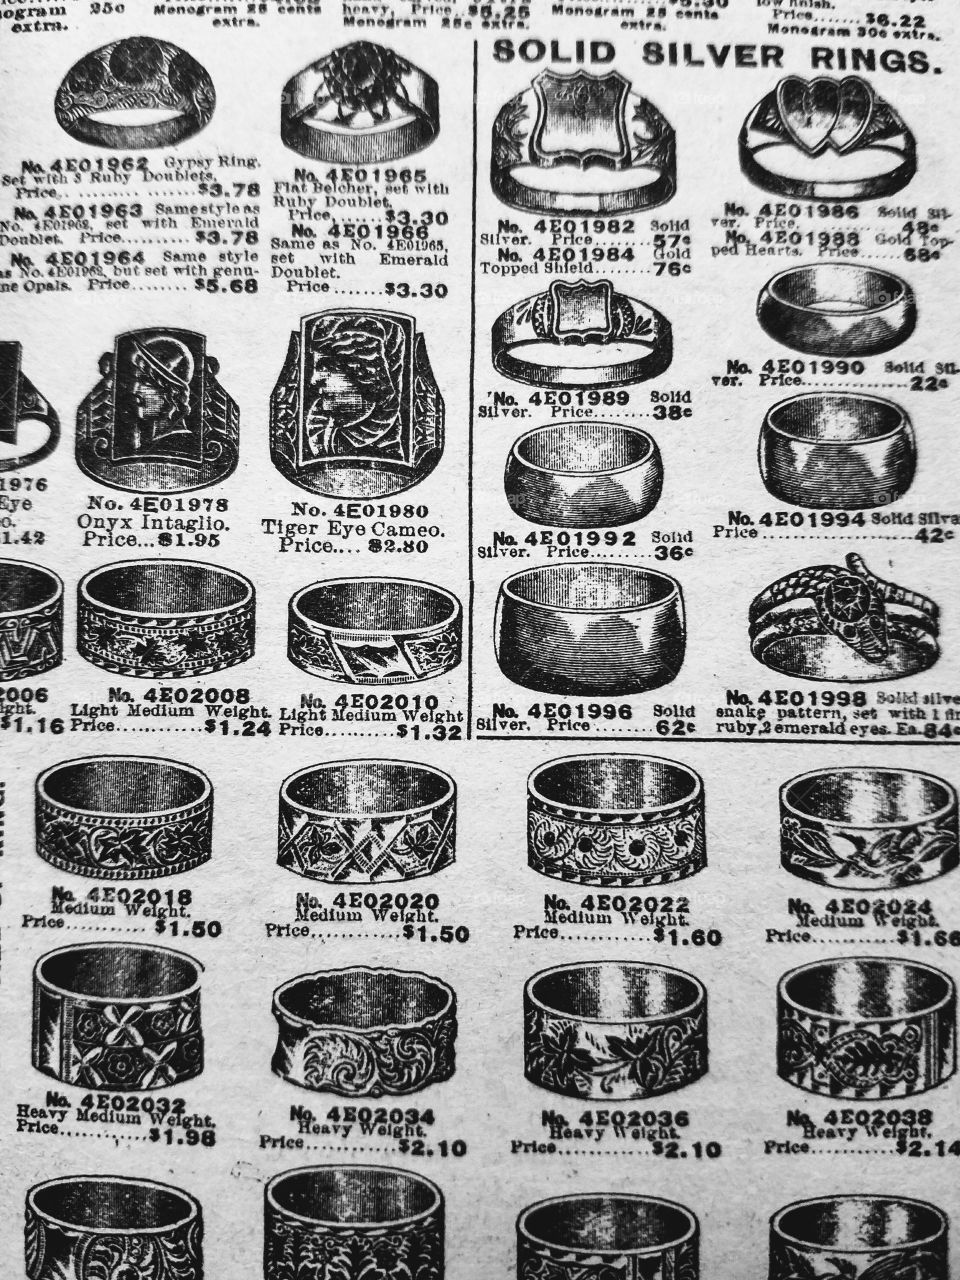 sears jewelry rings